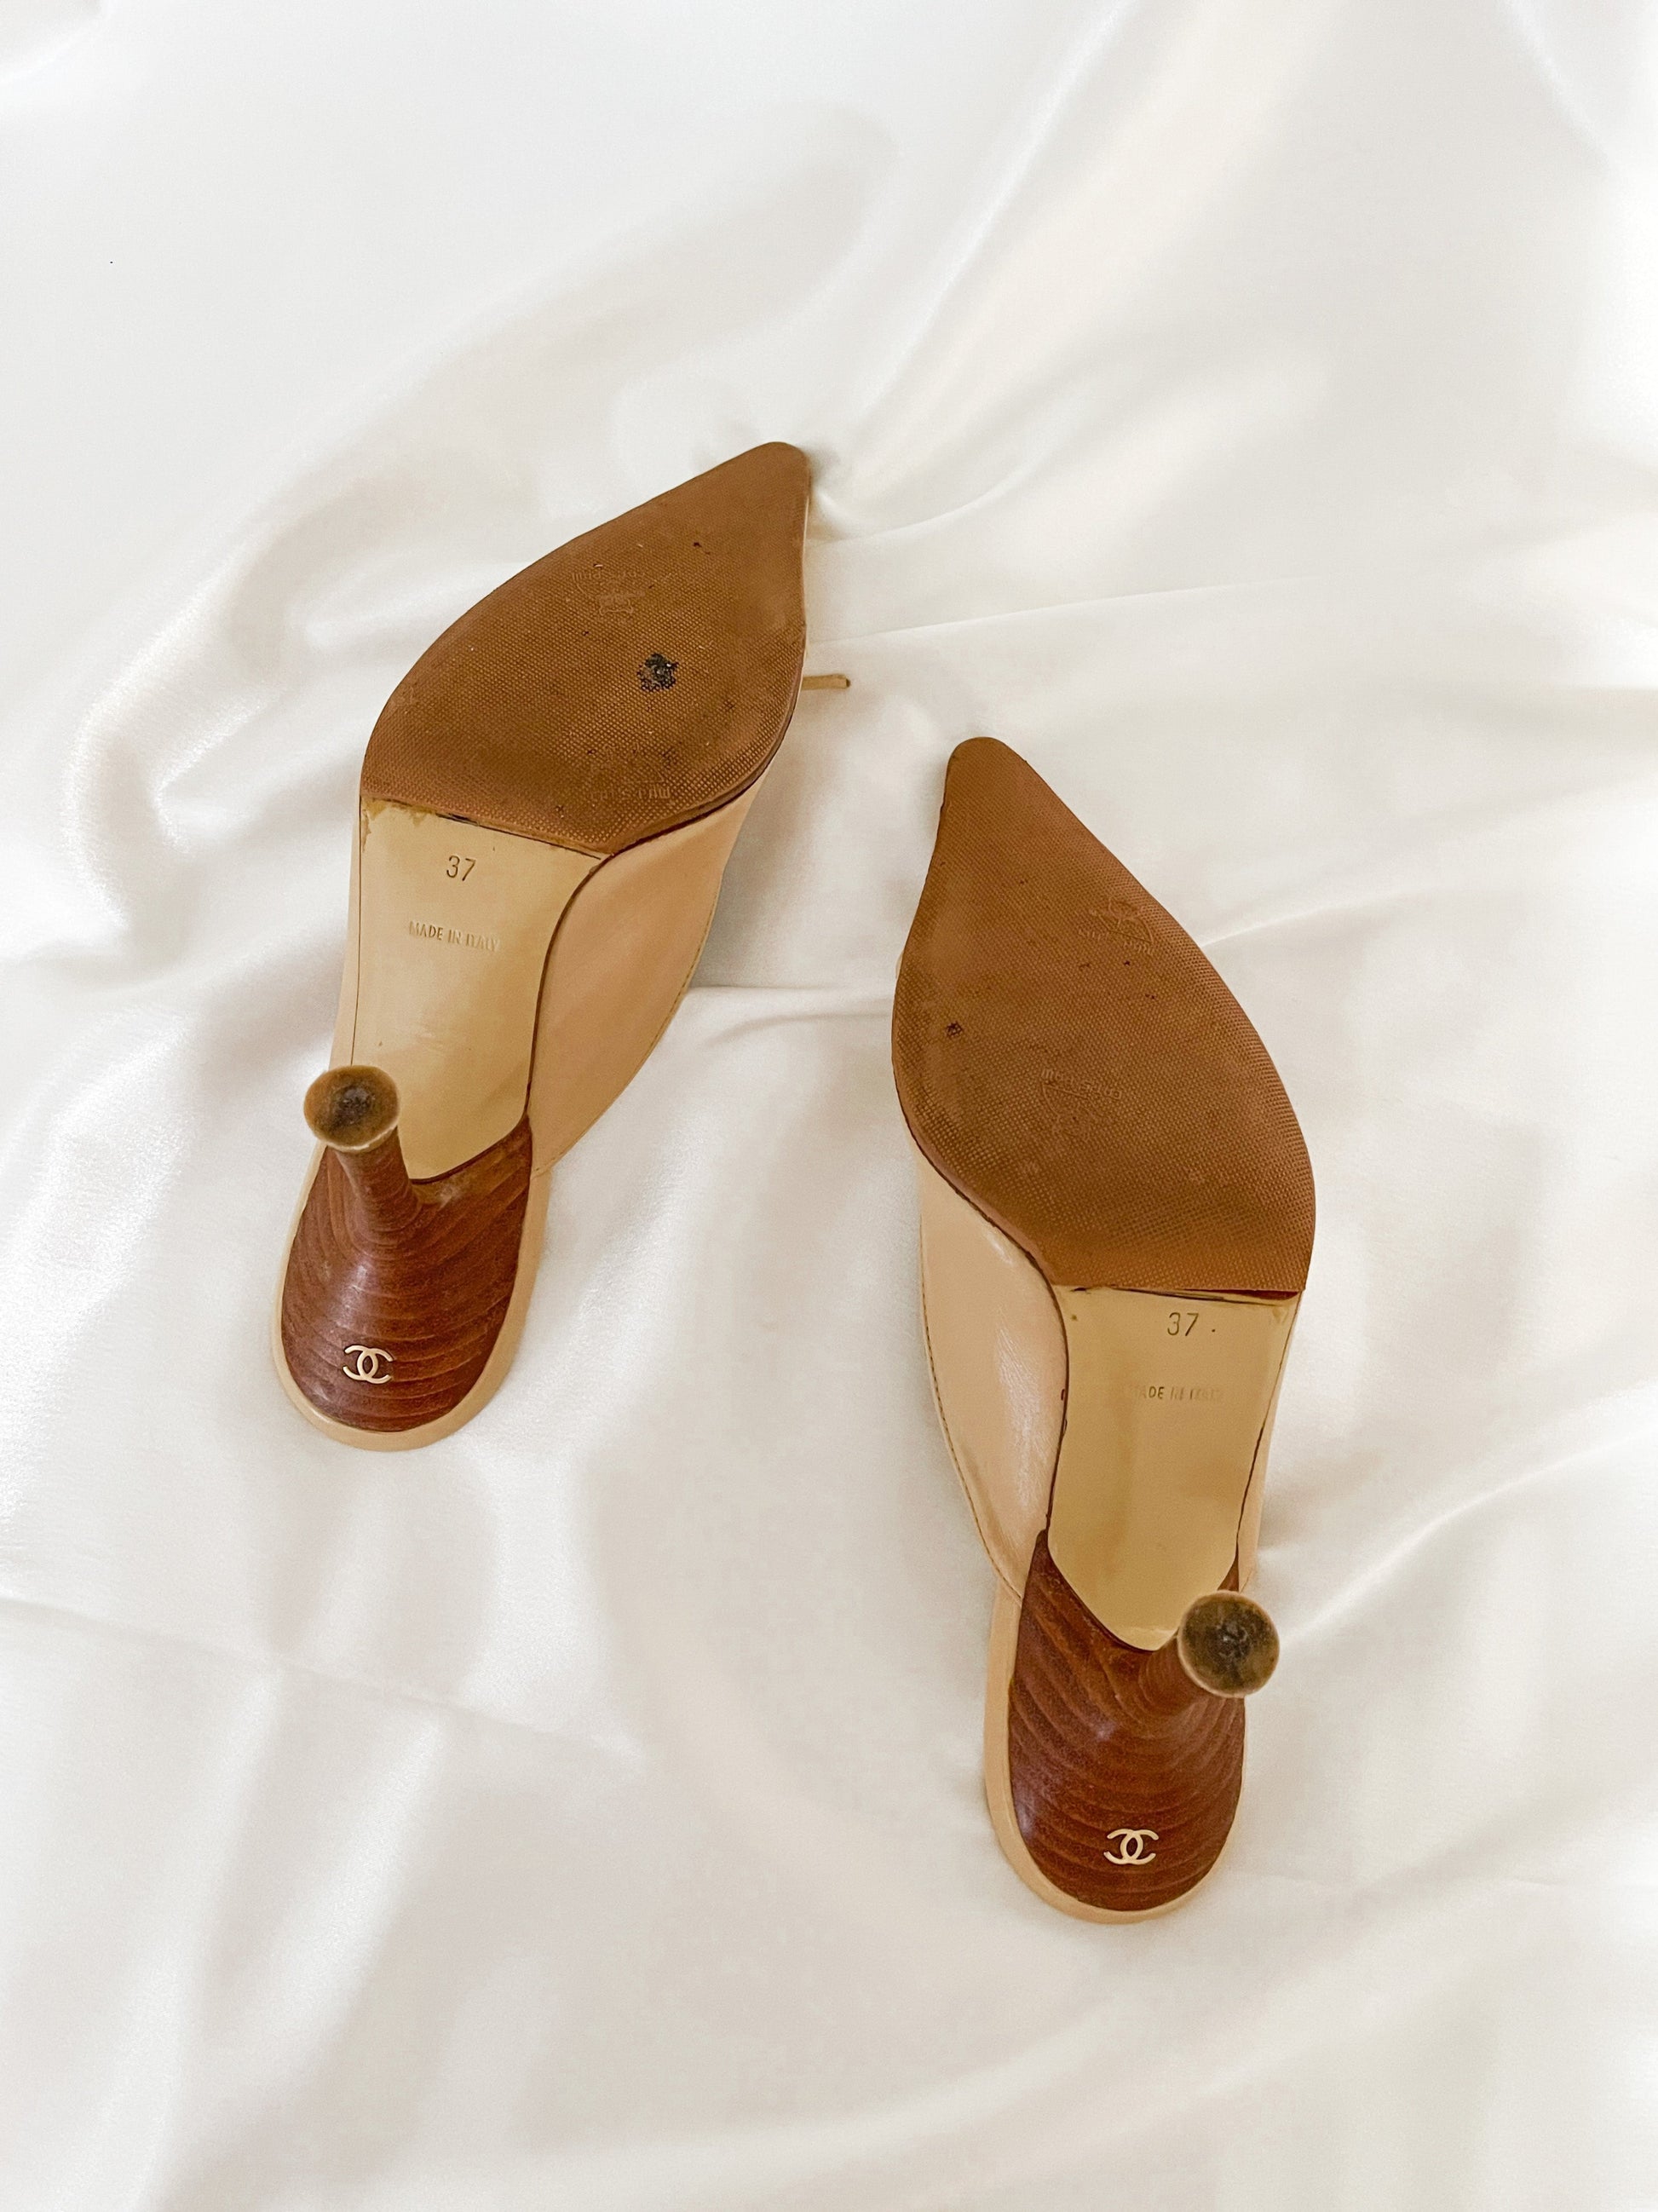 Louis Vuitton Vintage Pointed Toe Pumps/Heels